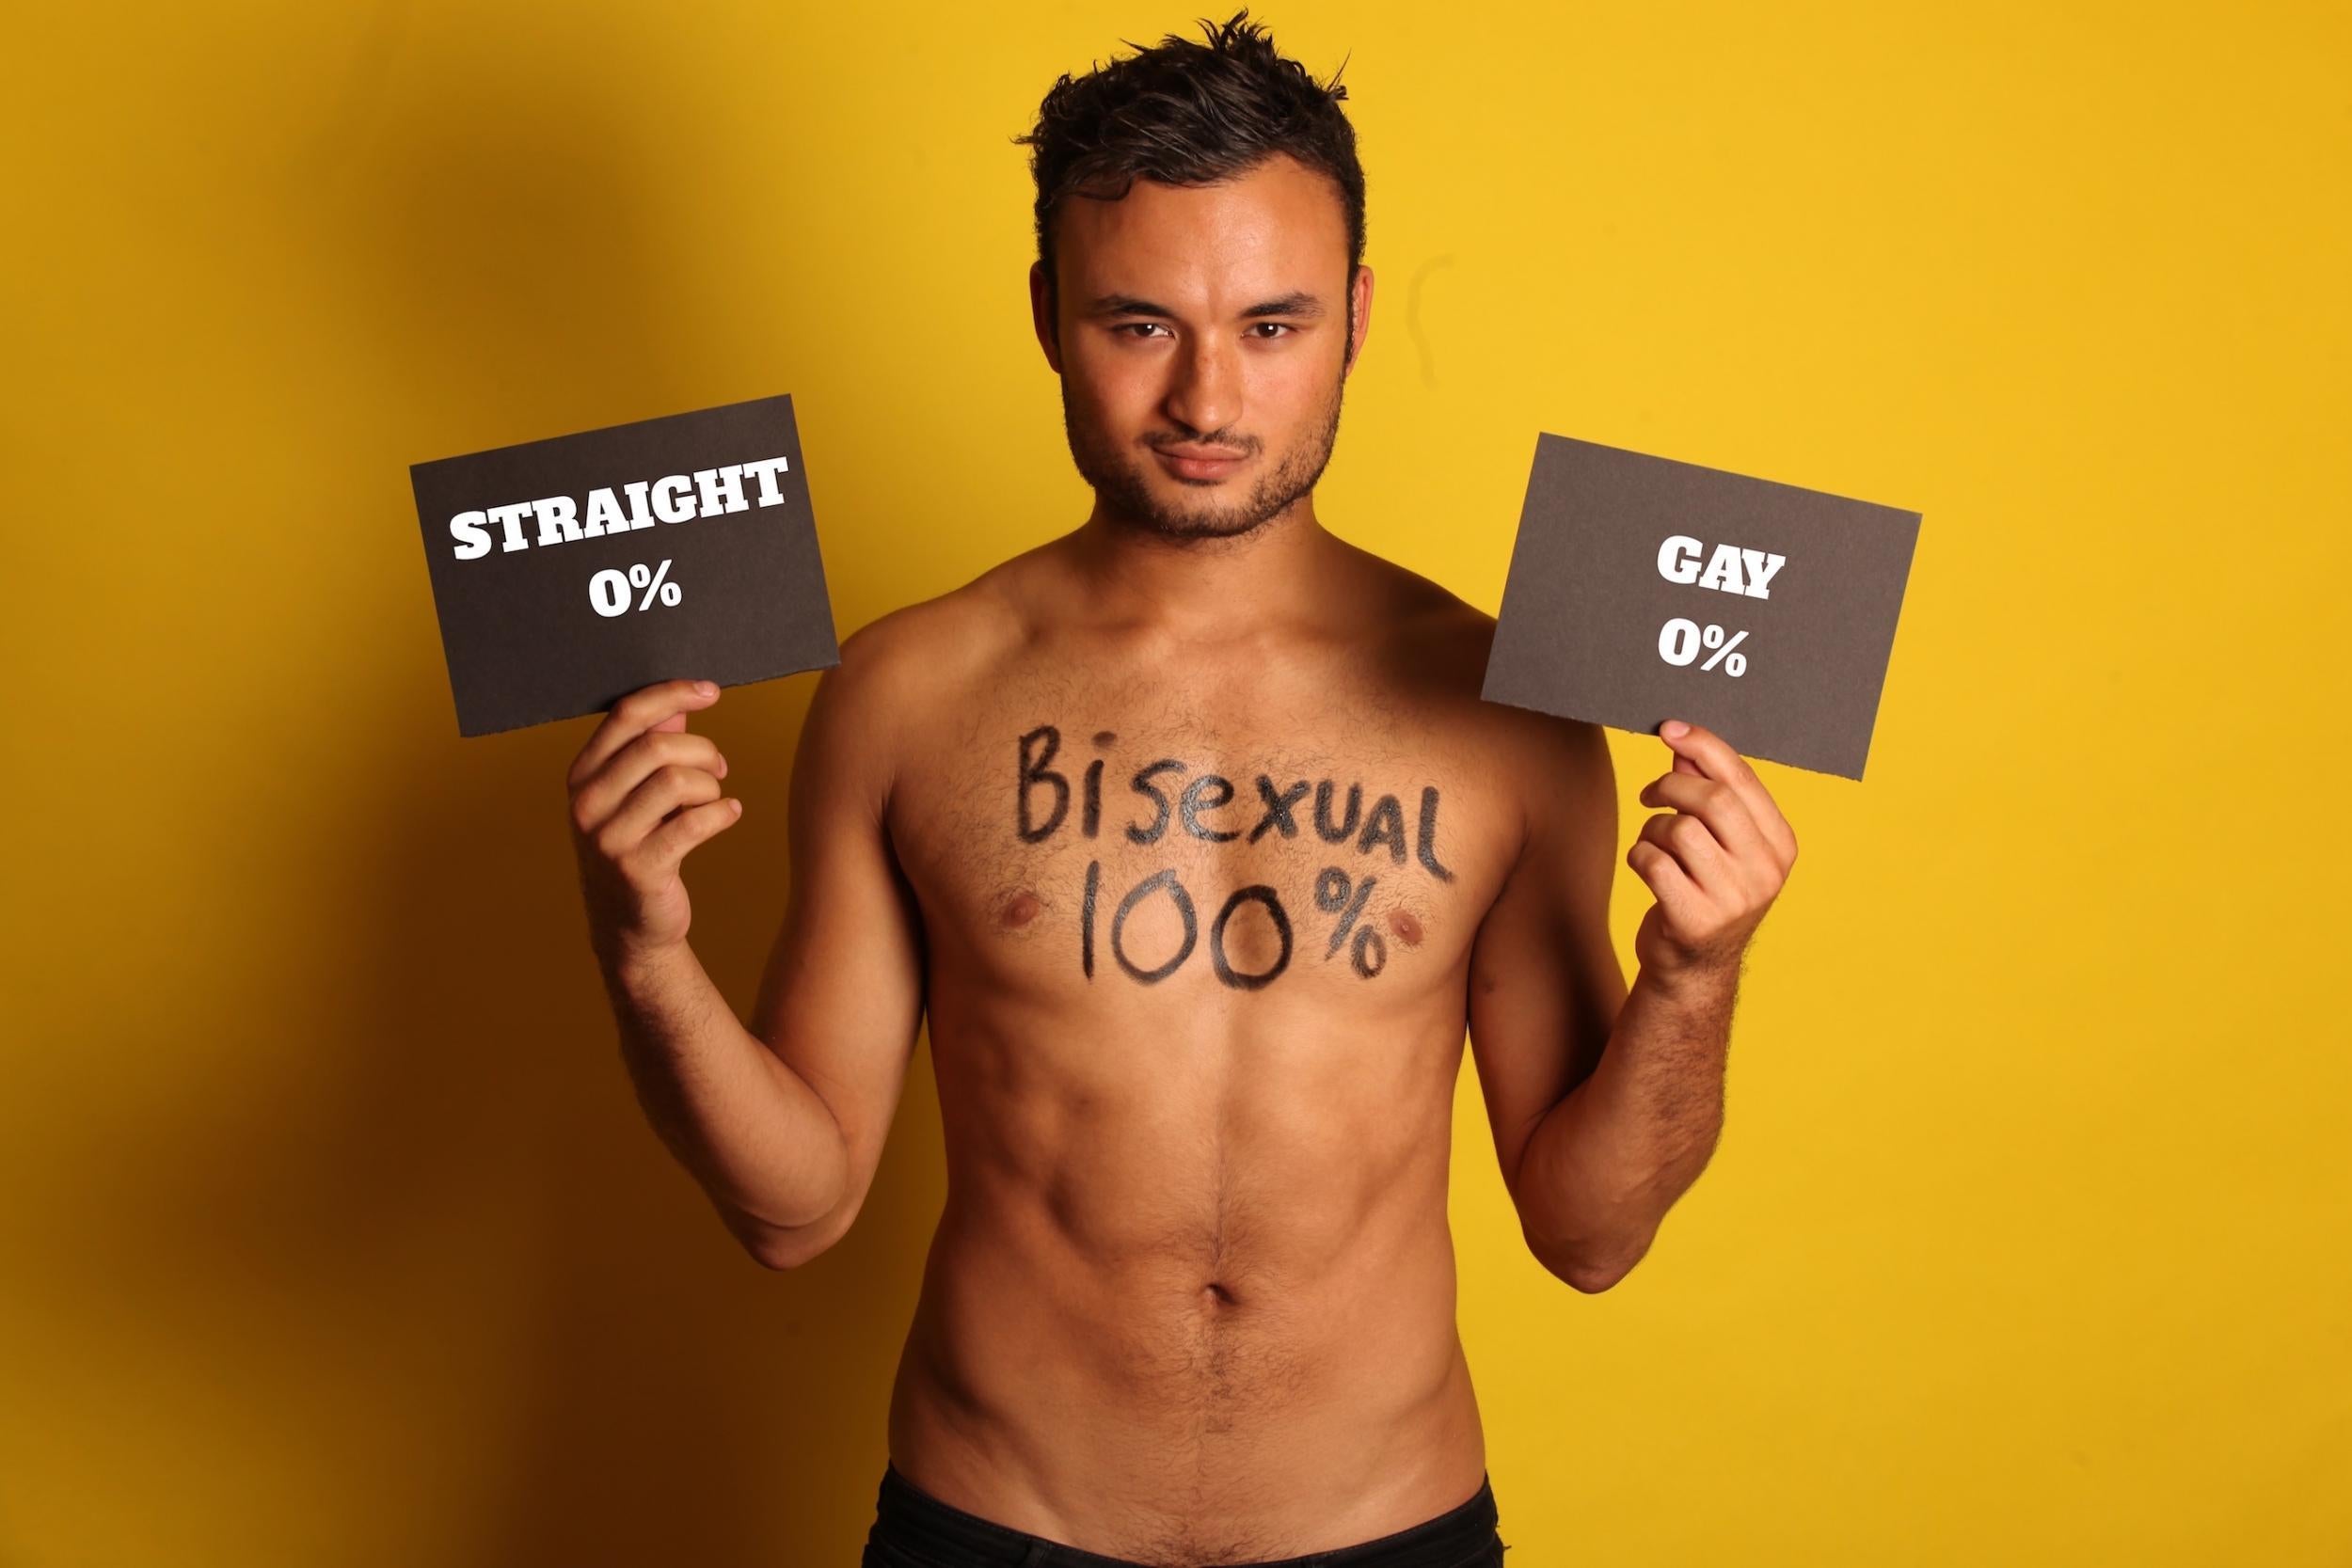 Male bisexual tube